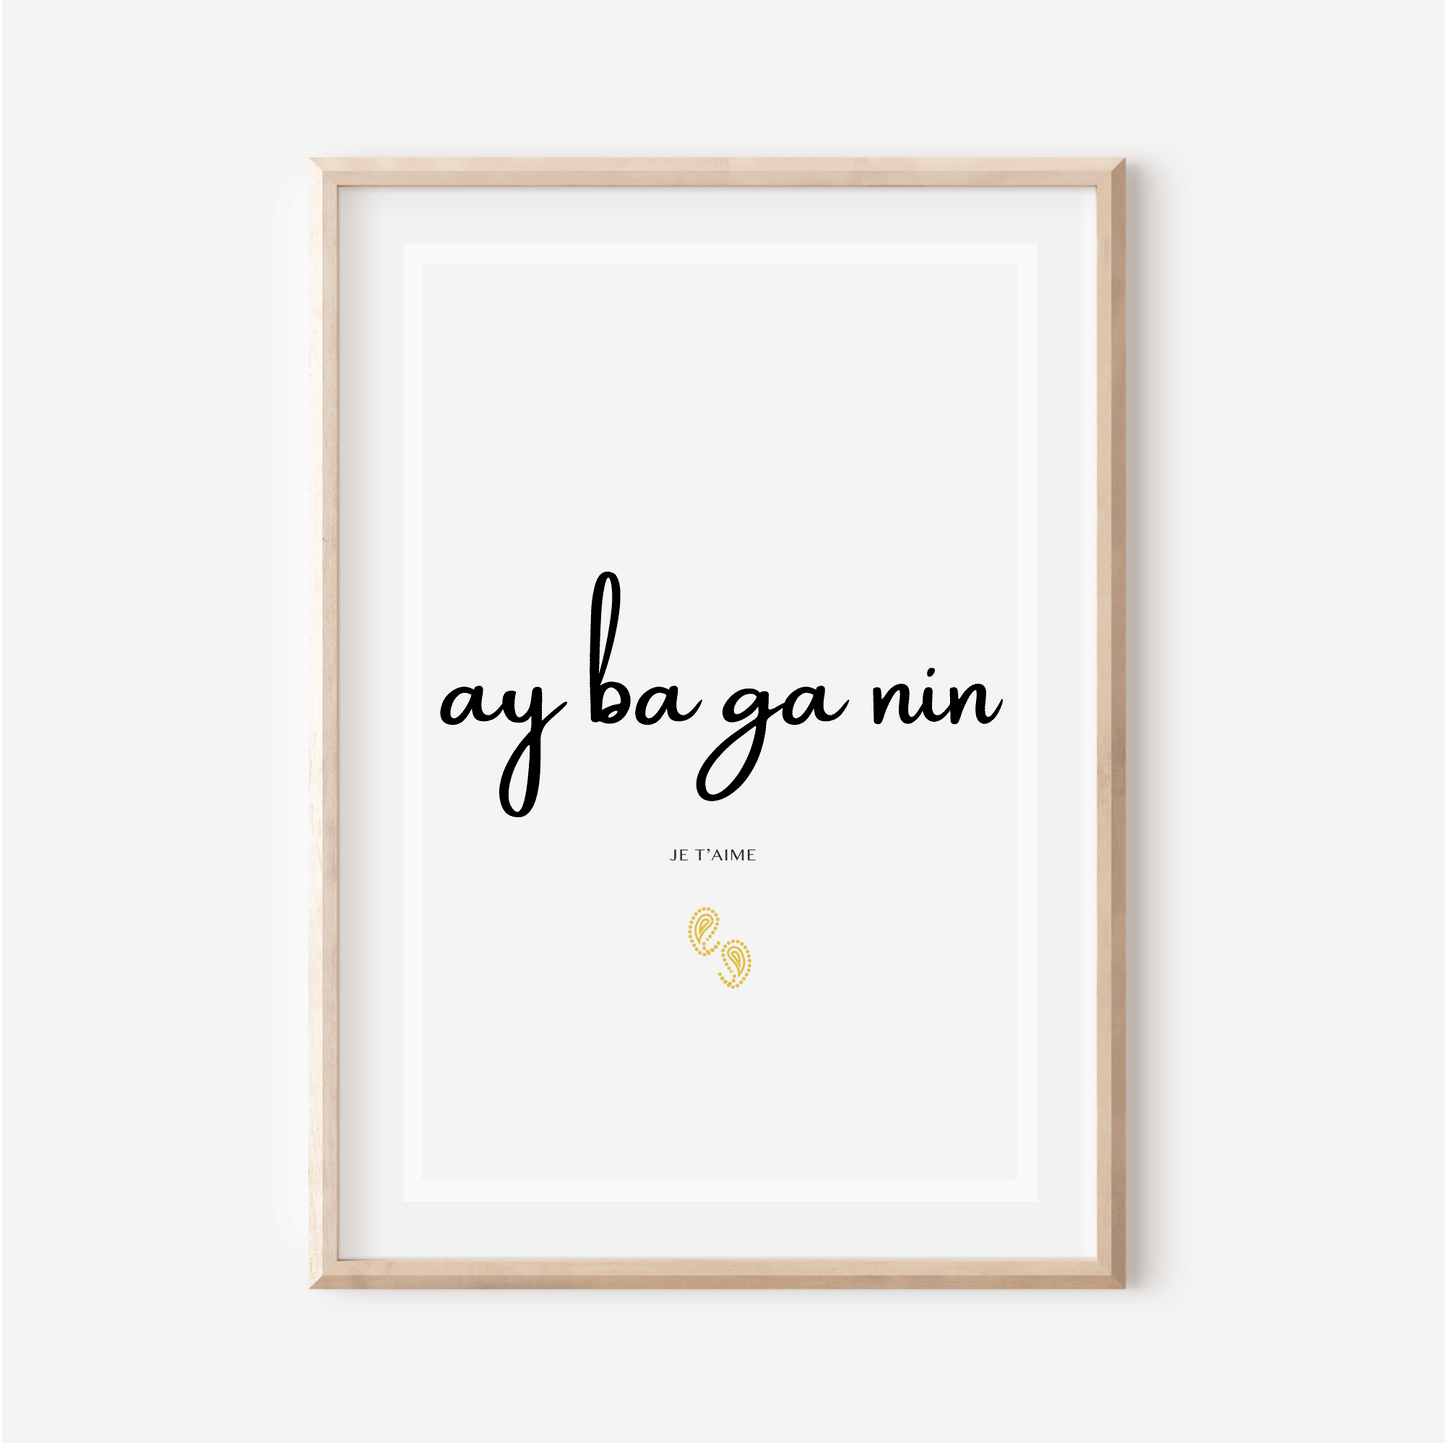 Affiche "Je t aime" en Songhai - "Ay ga ba nin" - 30x40 cm